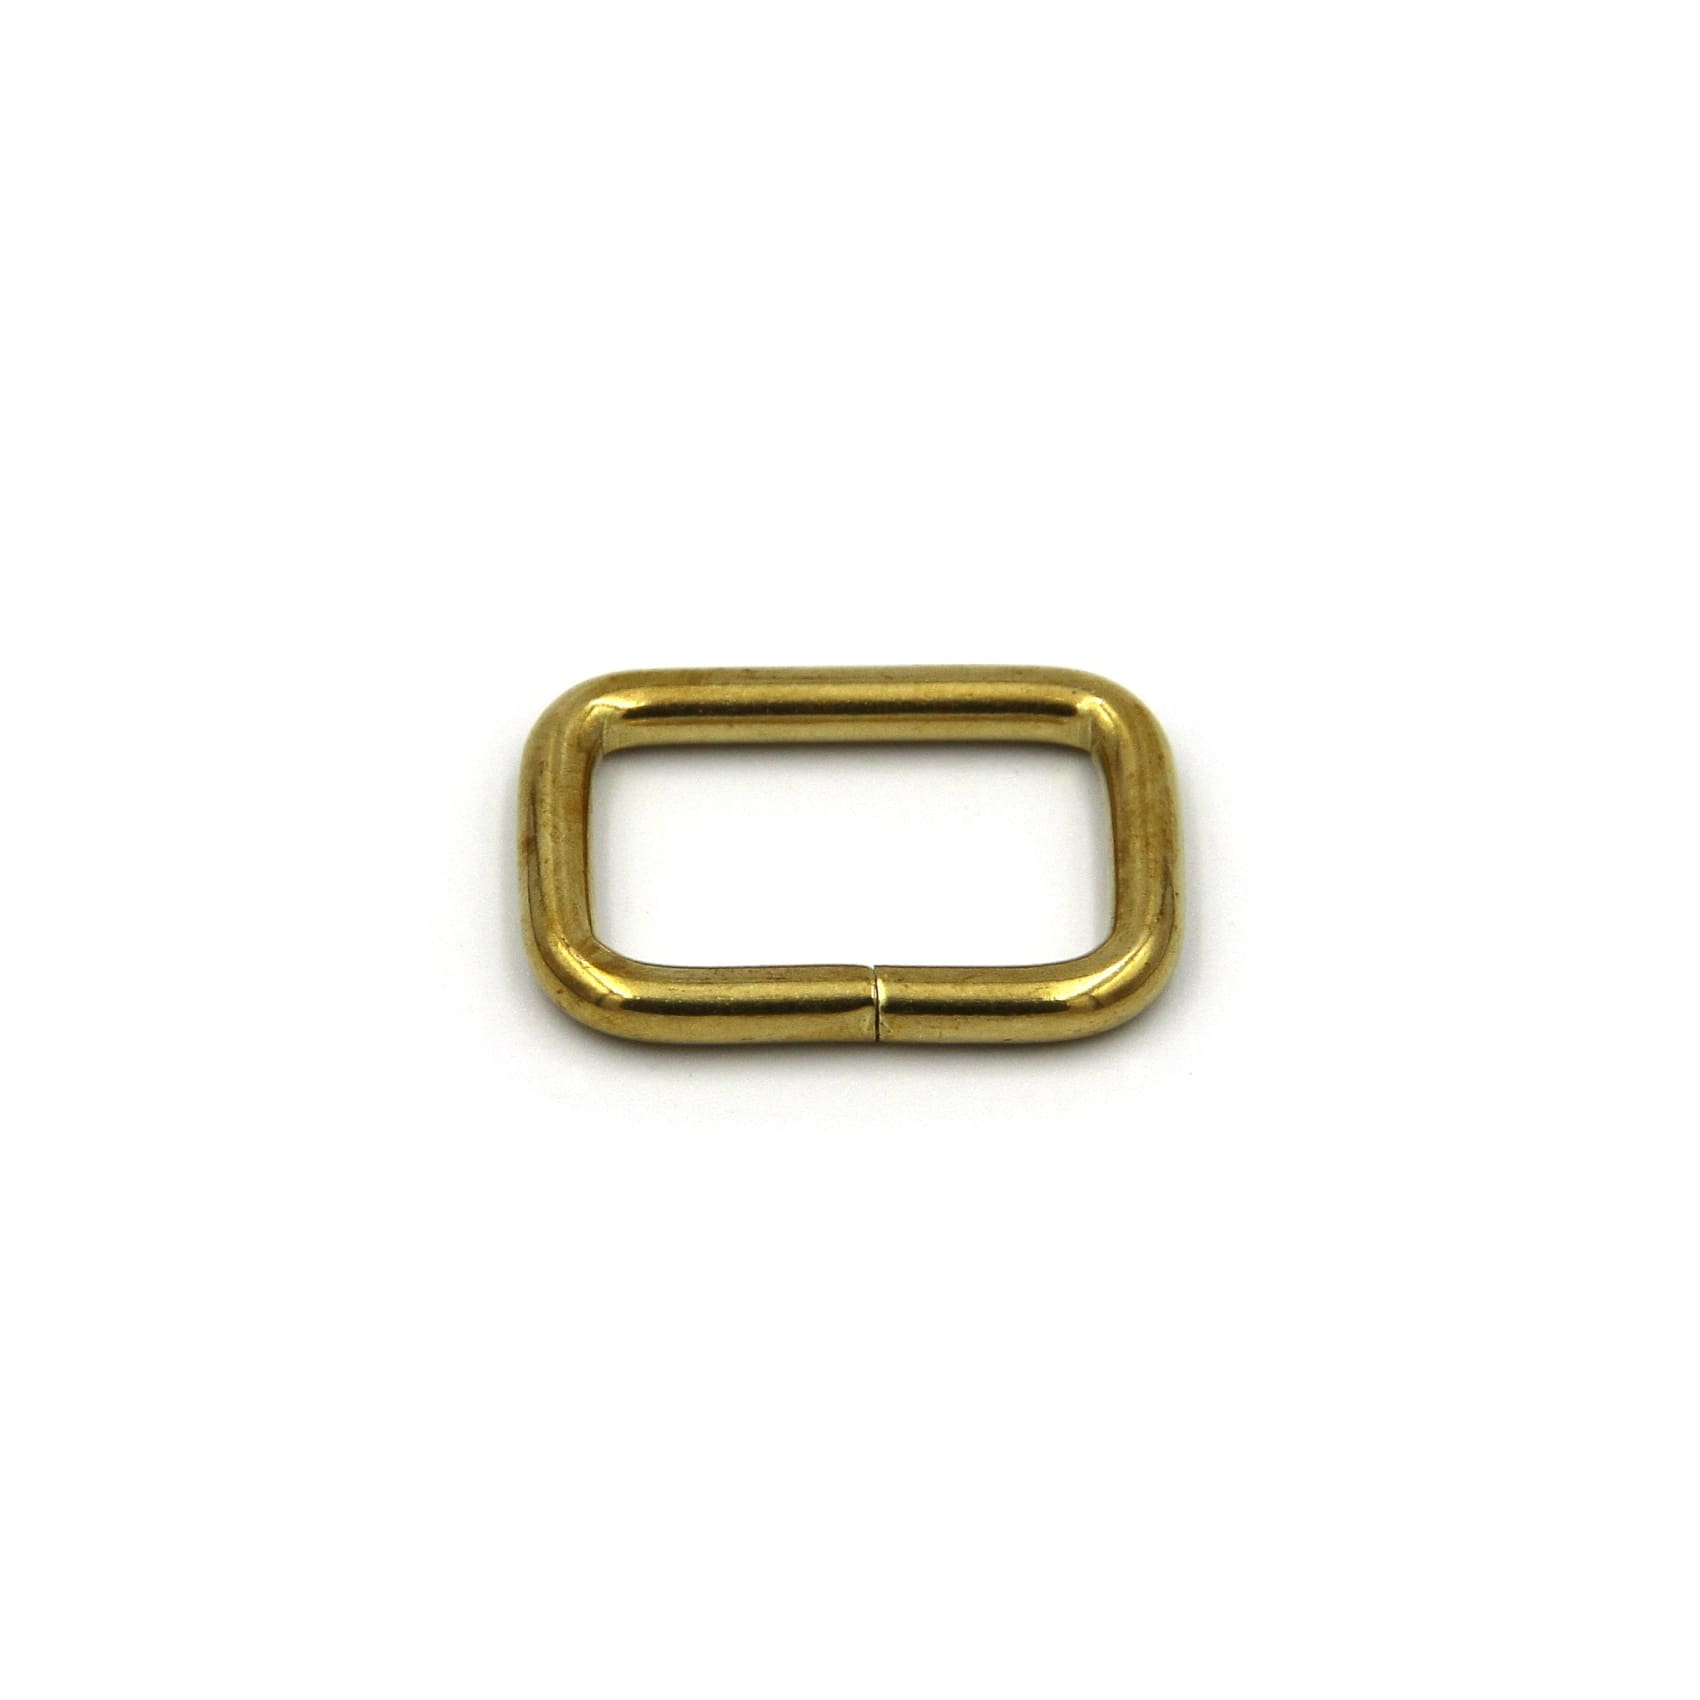 Brass Rectangular Ring Split Loop 26mm Leather Bag Strap Fastener